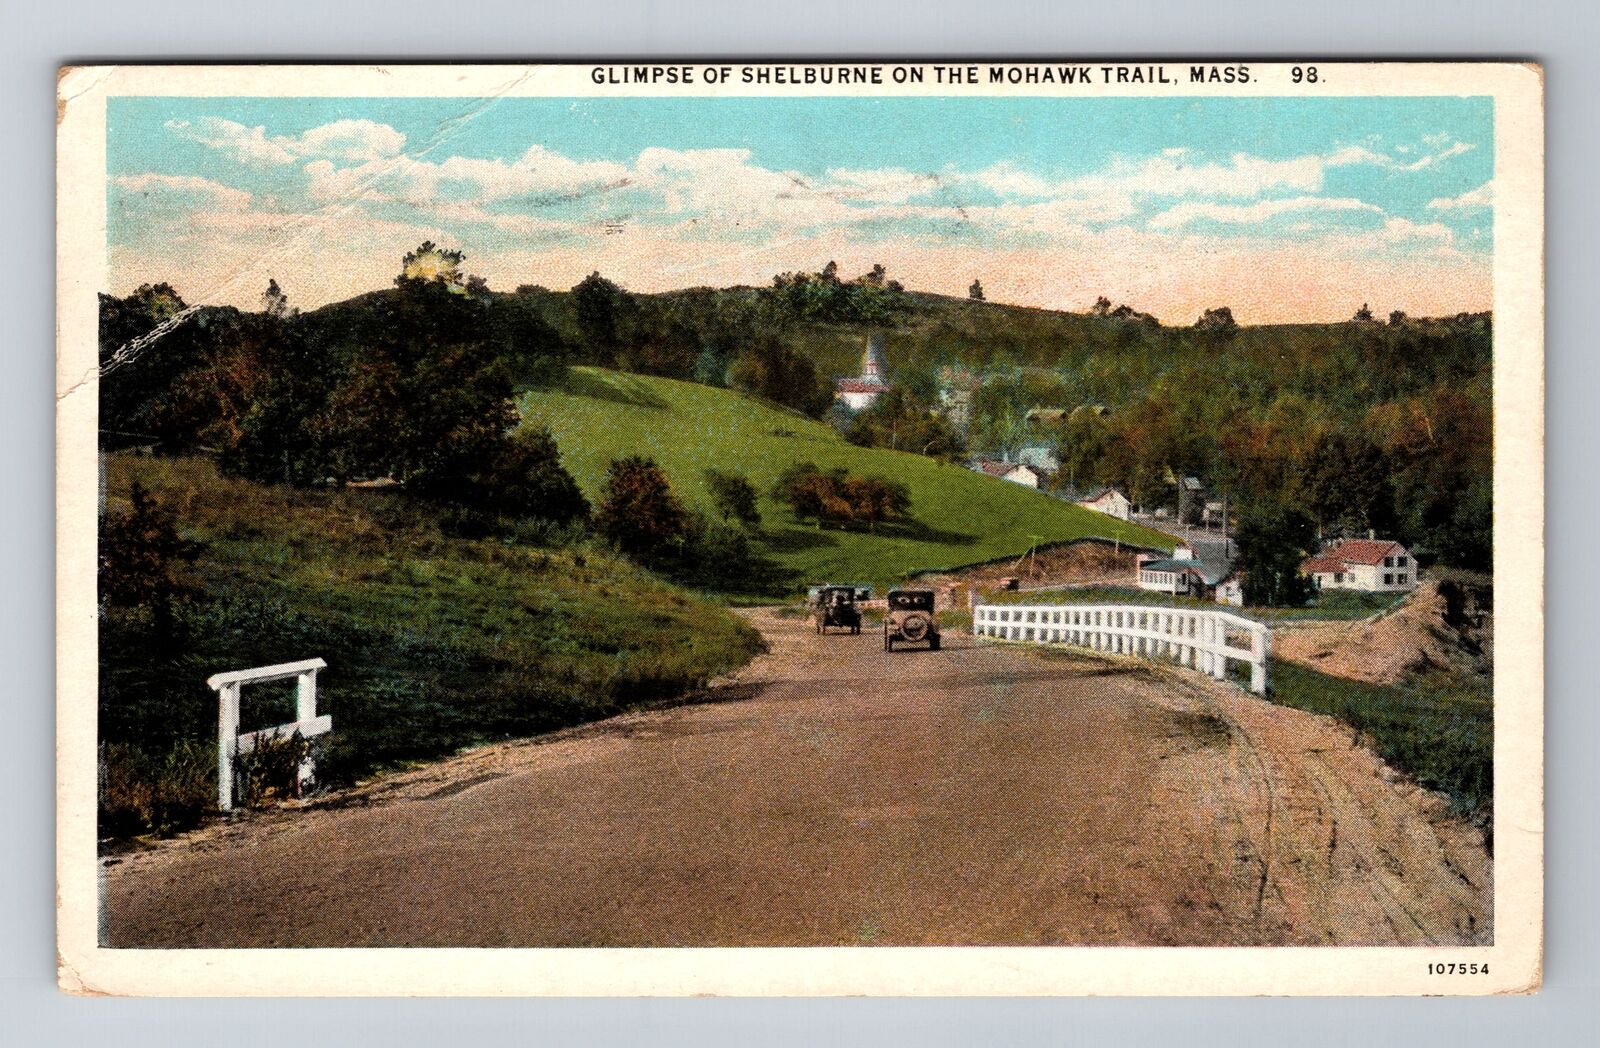 Shelburne MA-Massachusetts, Scenic Village, Mohawk Trail, Vintage c1931 Postcard